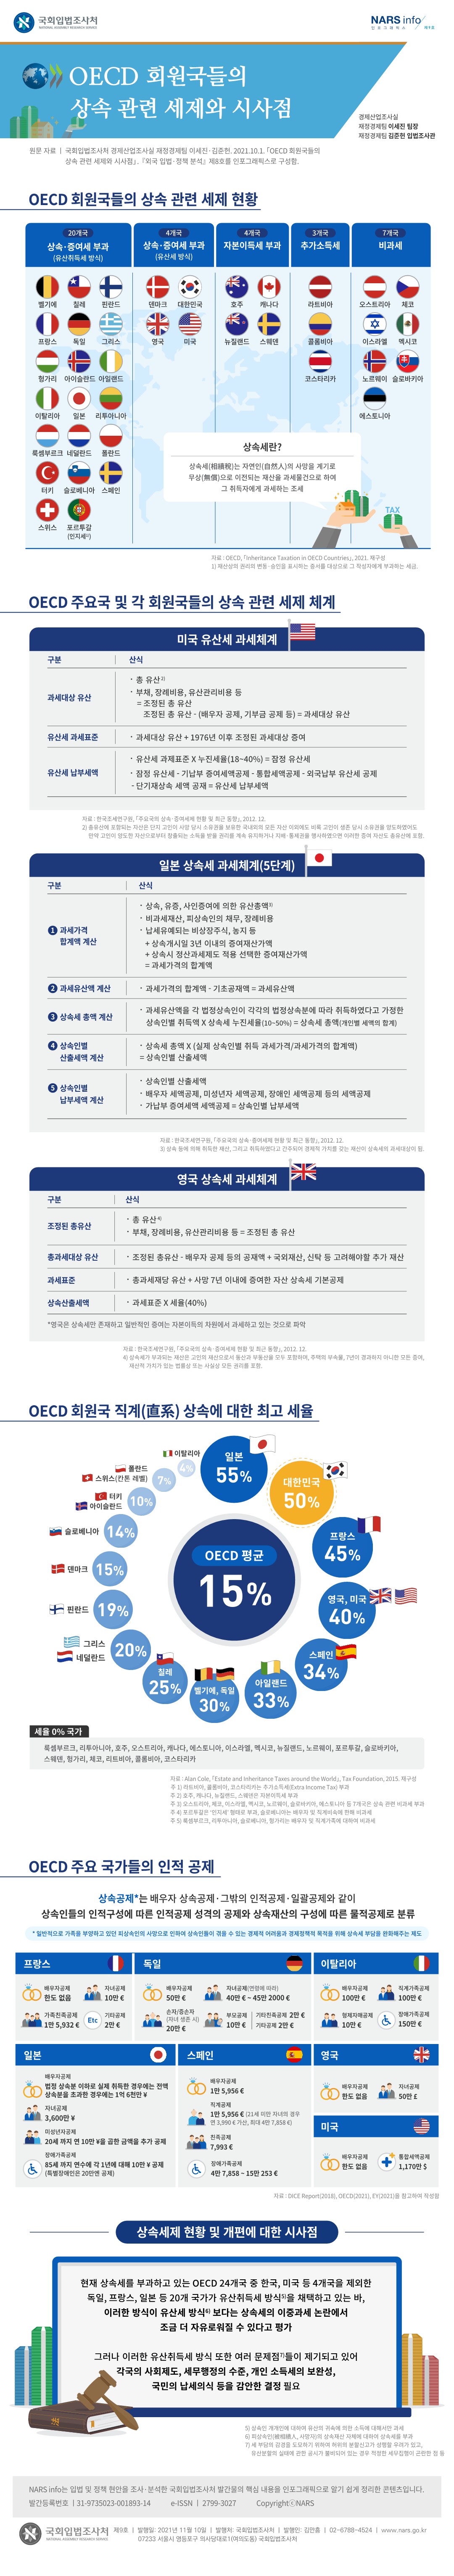 OECD 회원국들의 상속 관련 세제와 시사점